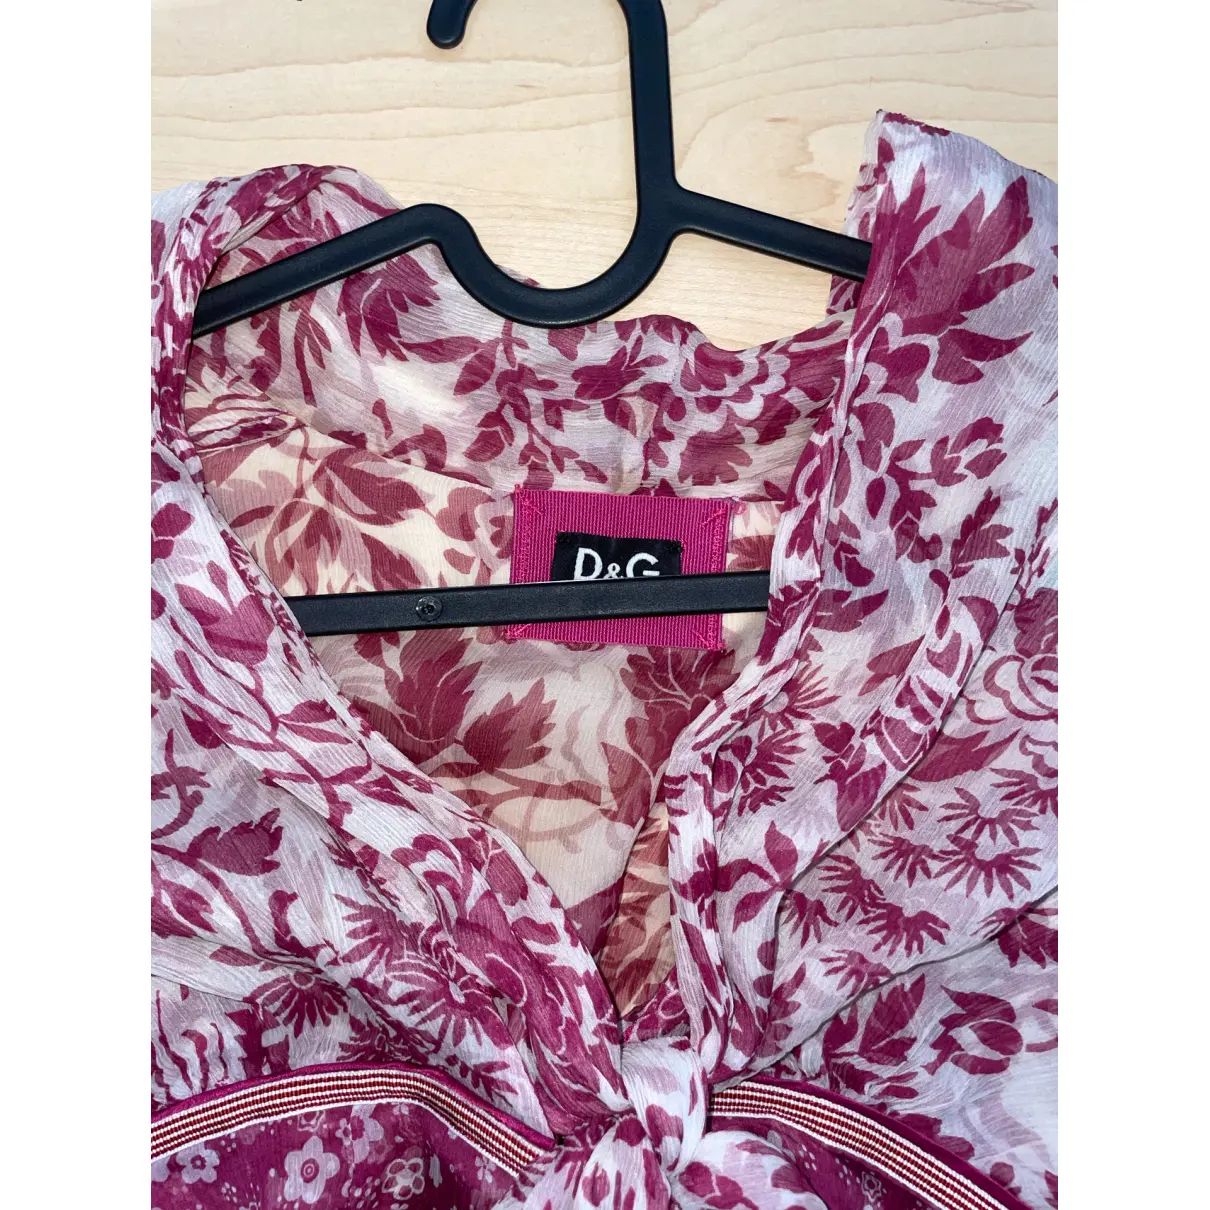 Buy D&G Silk blouse online